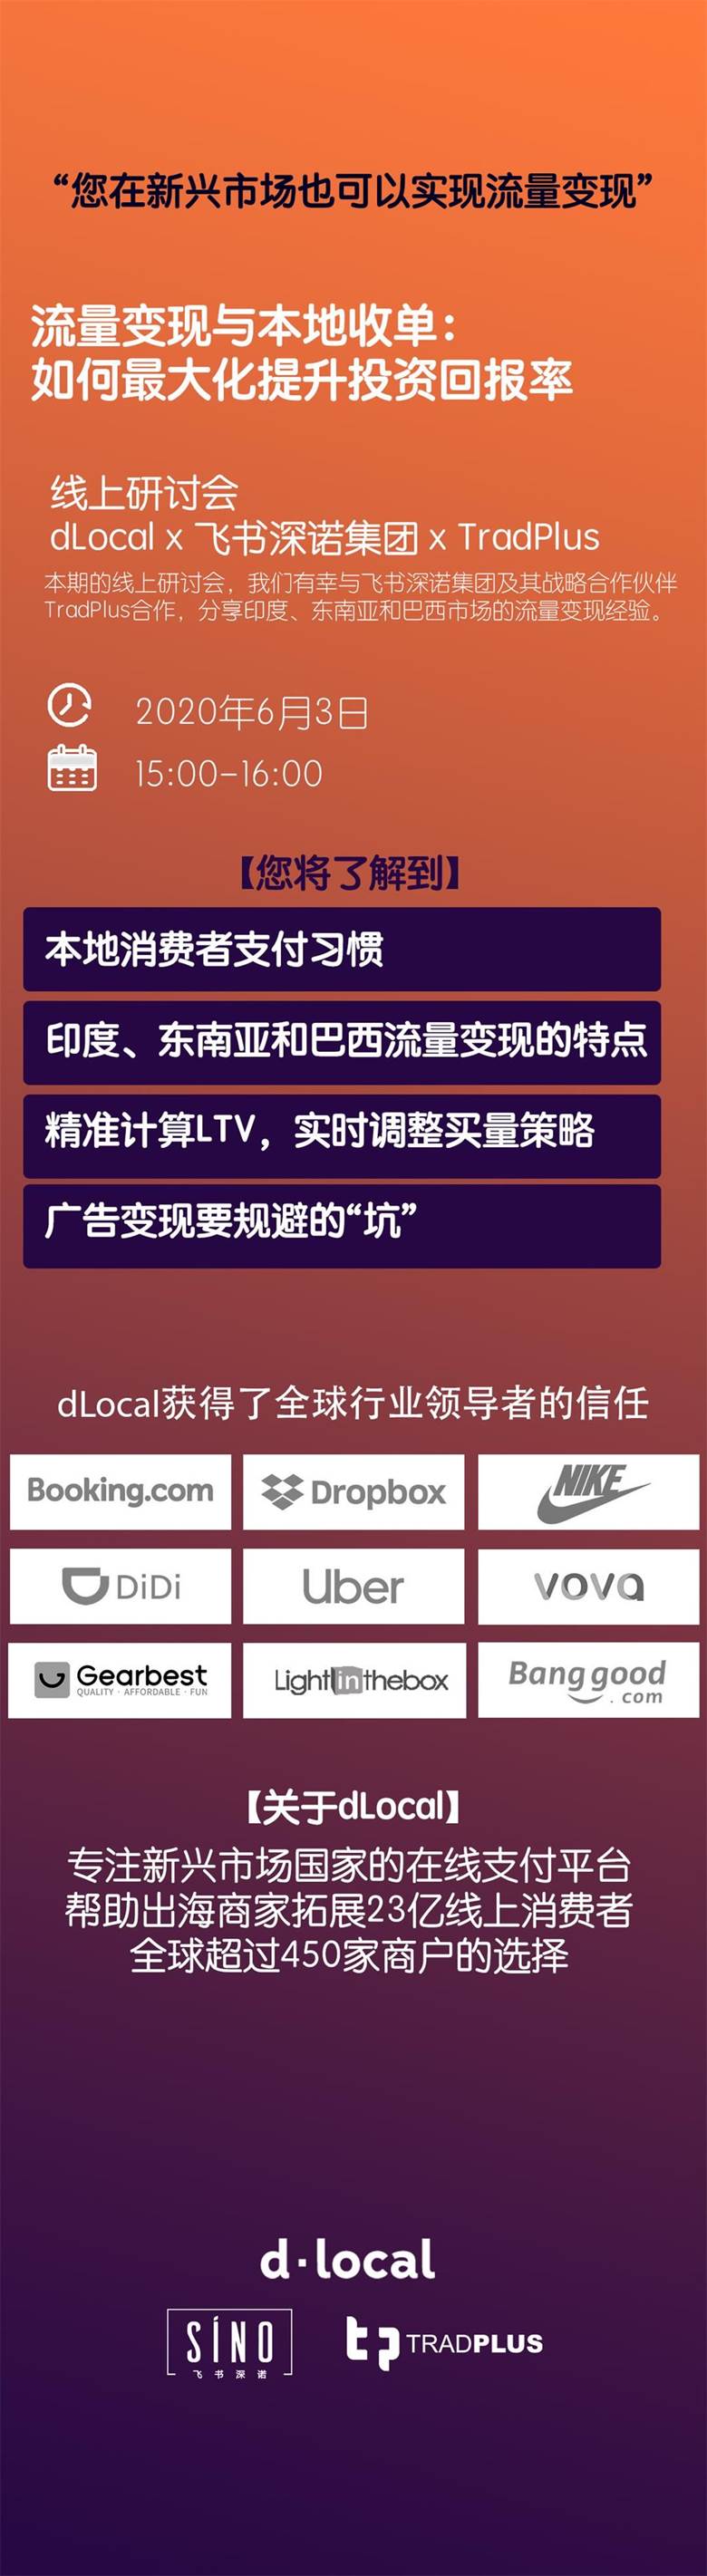 Webinar mobile pic-dlocalxmeetsocial-huodongxing.jpg